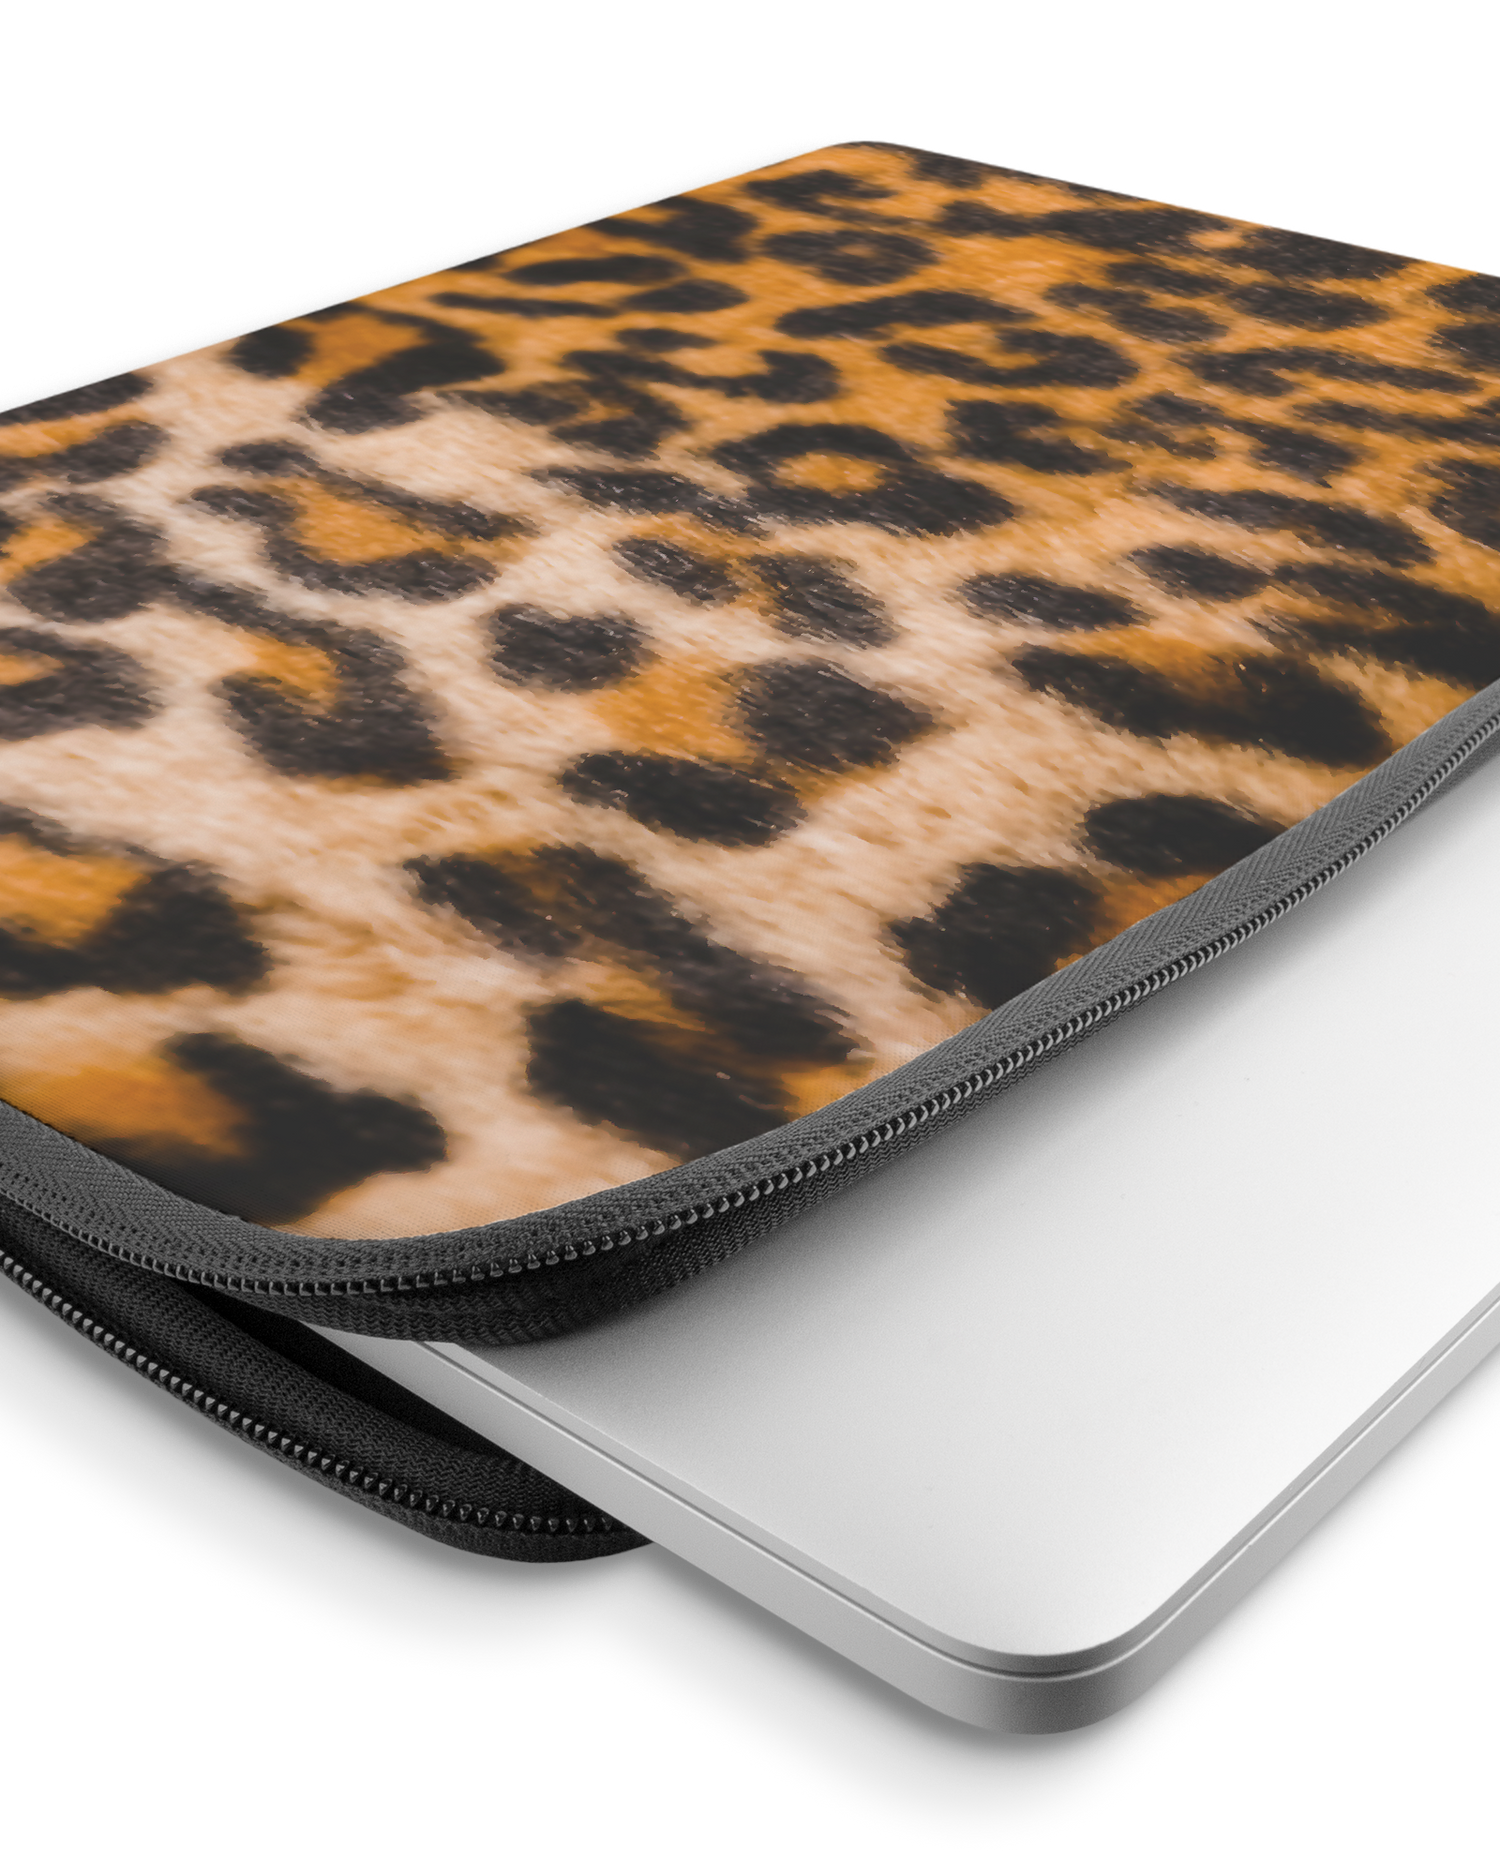 Leopard Pattern Laptophülle 15-16 Zoll mit Gerät im Inneren